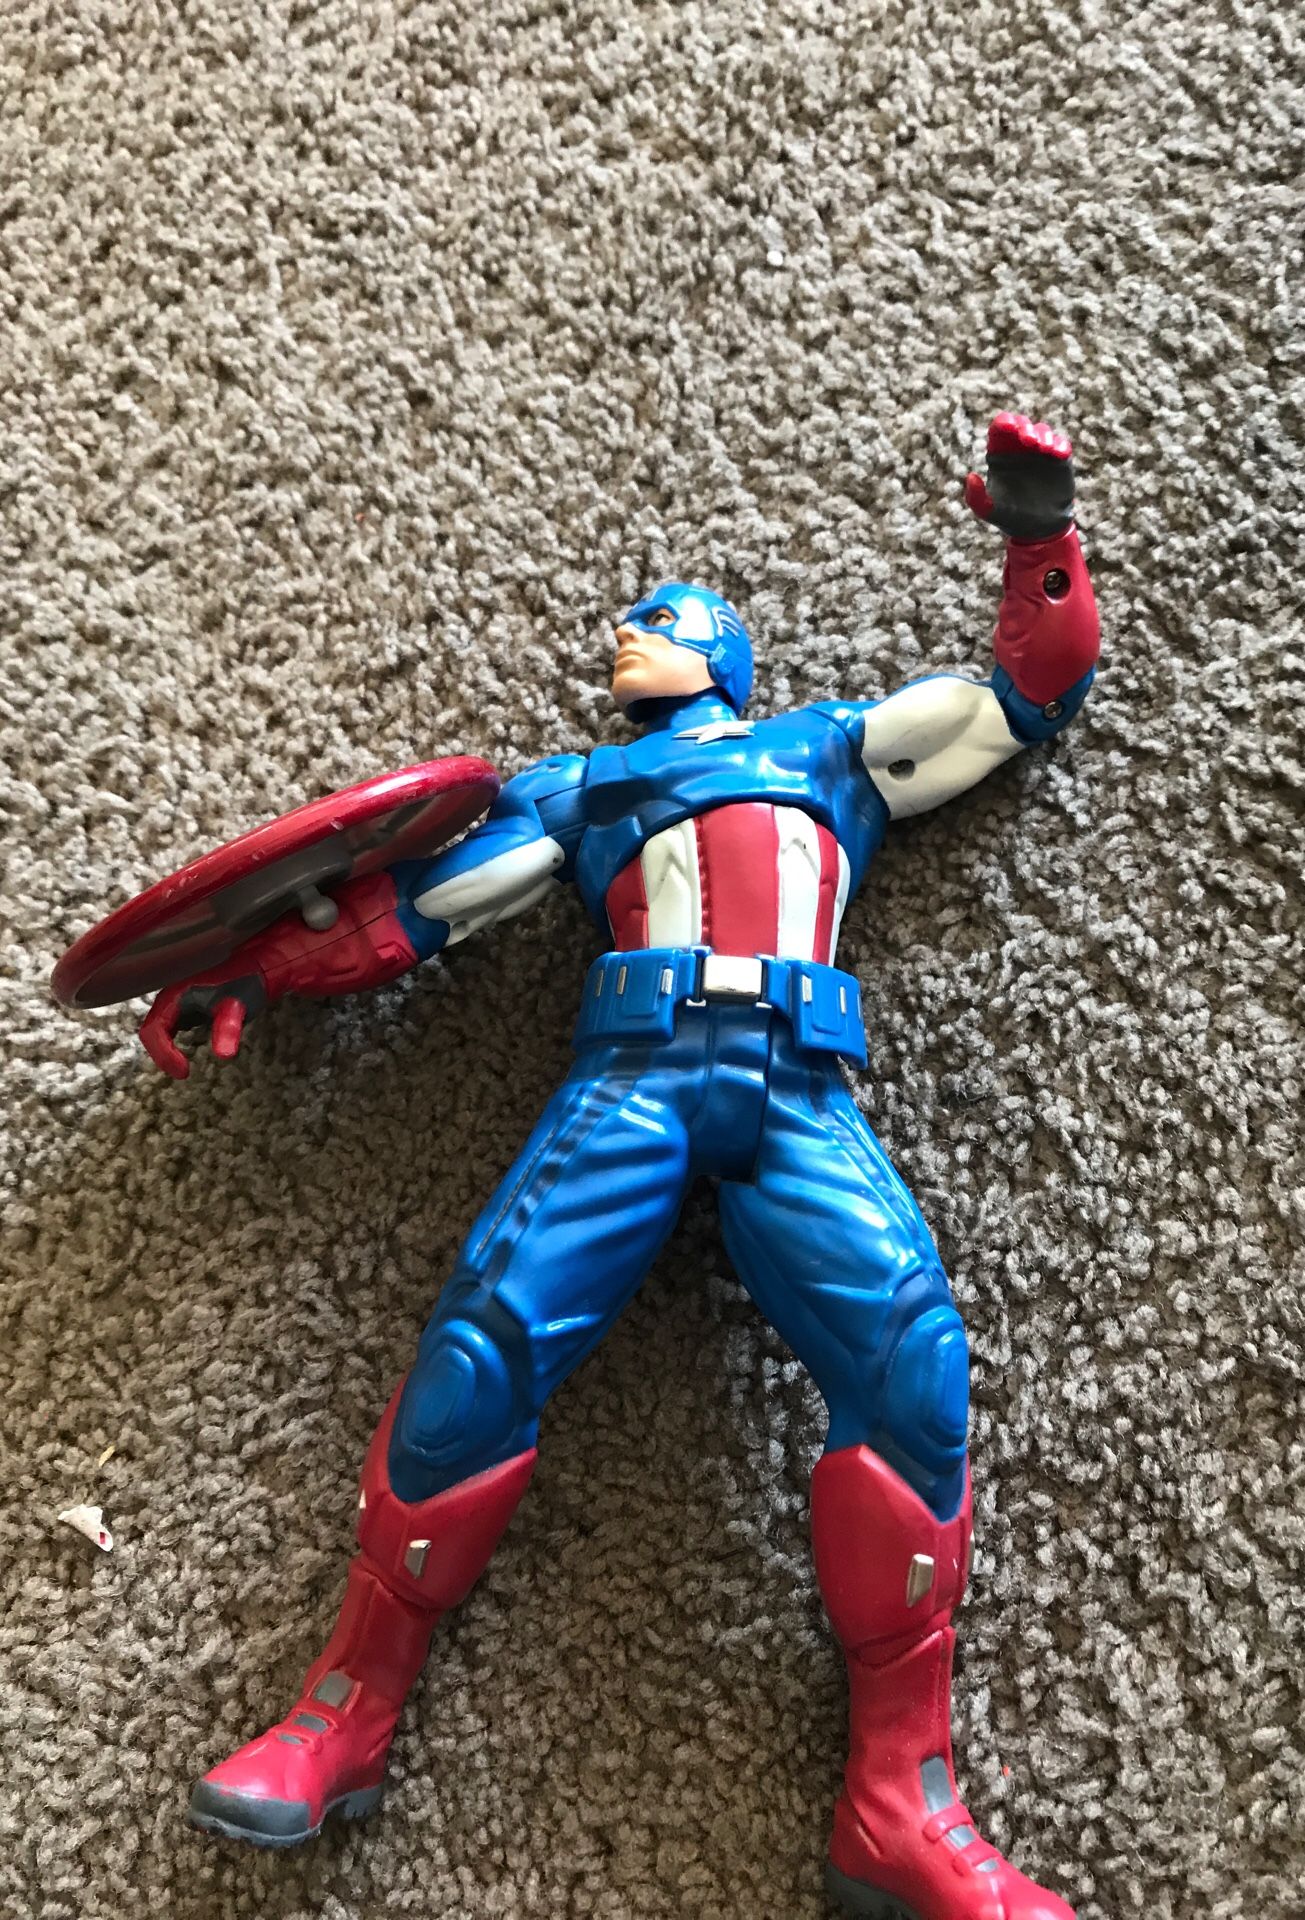 Toy captain america